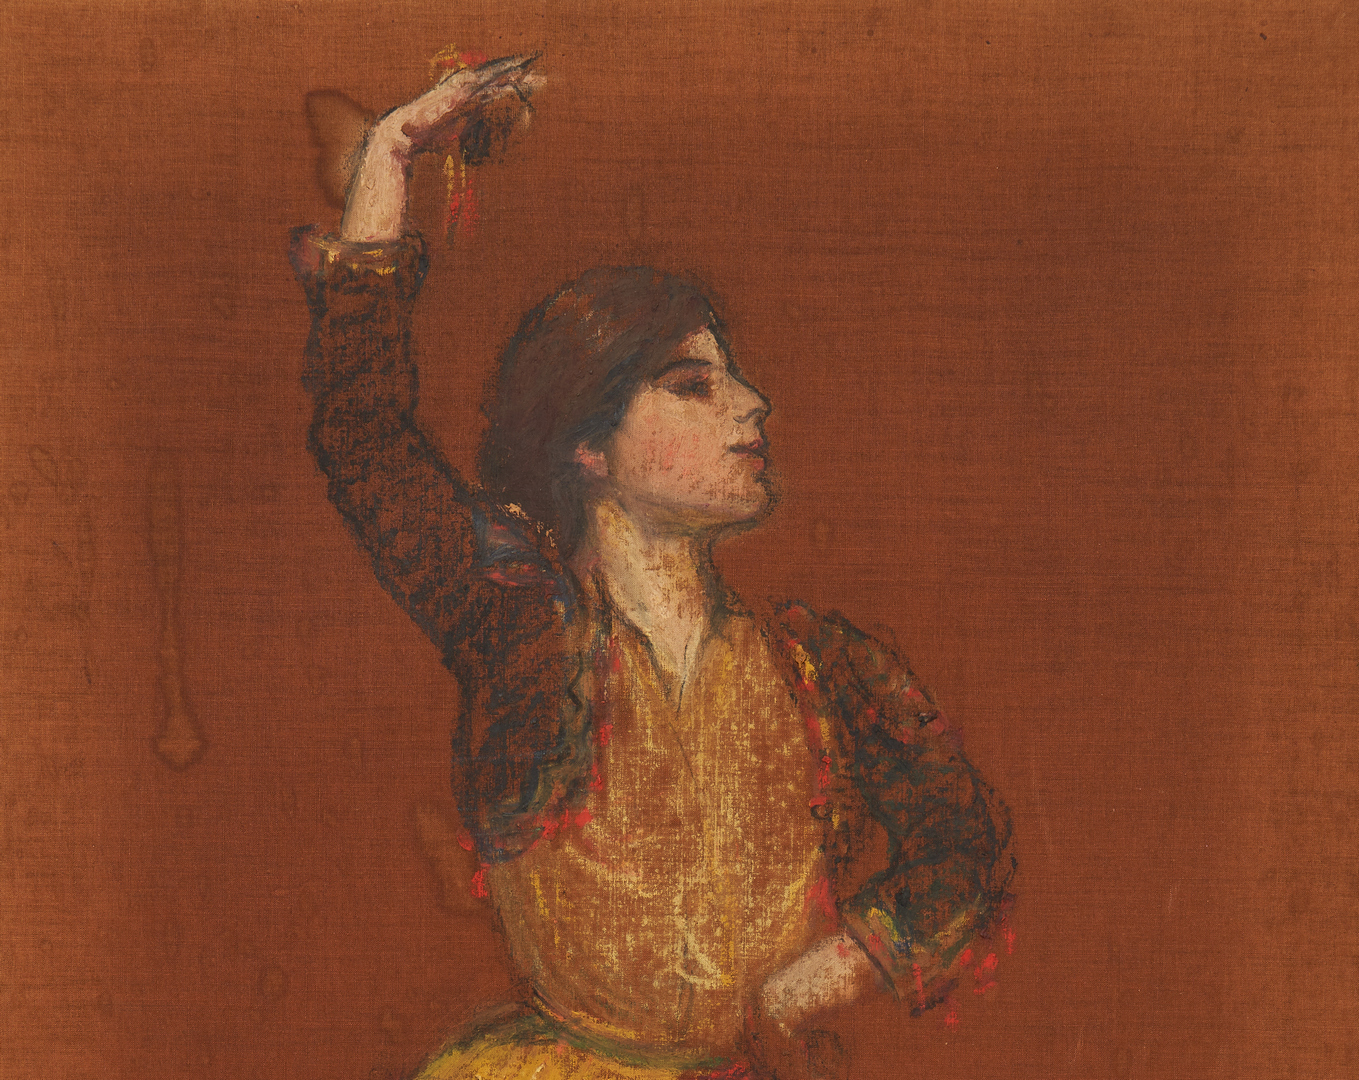 Lot 92: Exhibited Louis Kronberg Oil Painting, Spanish Dancer